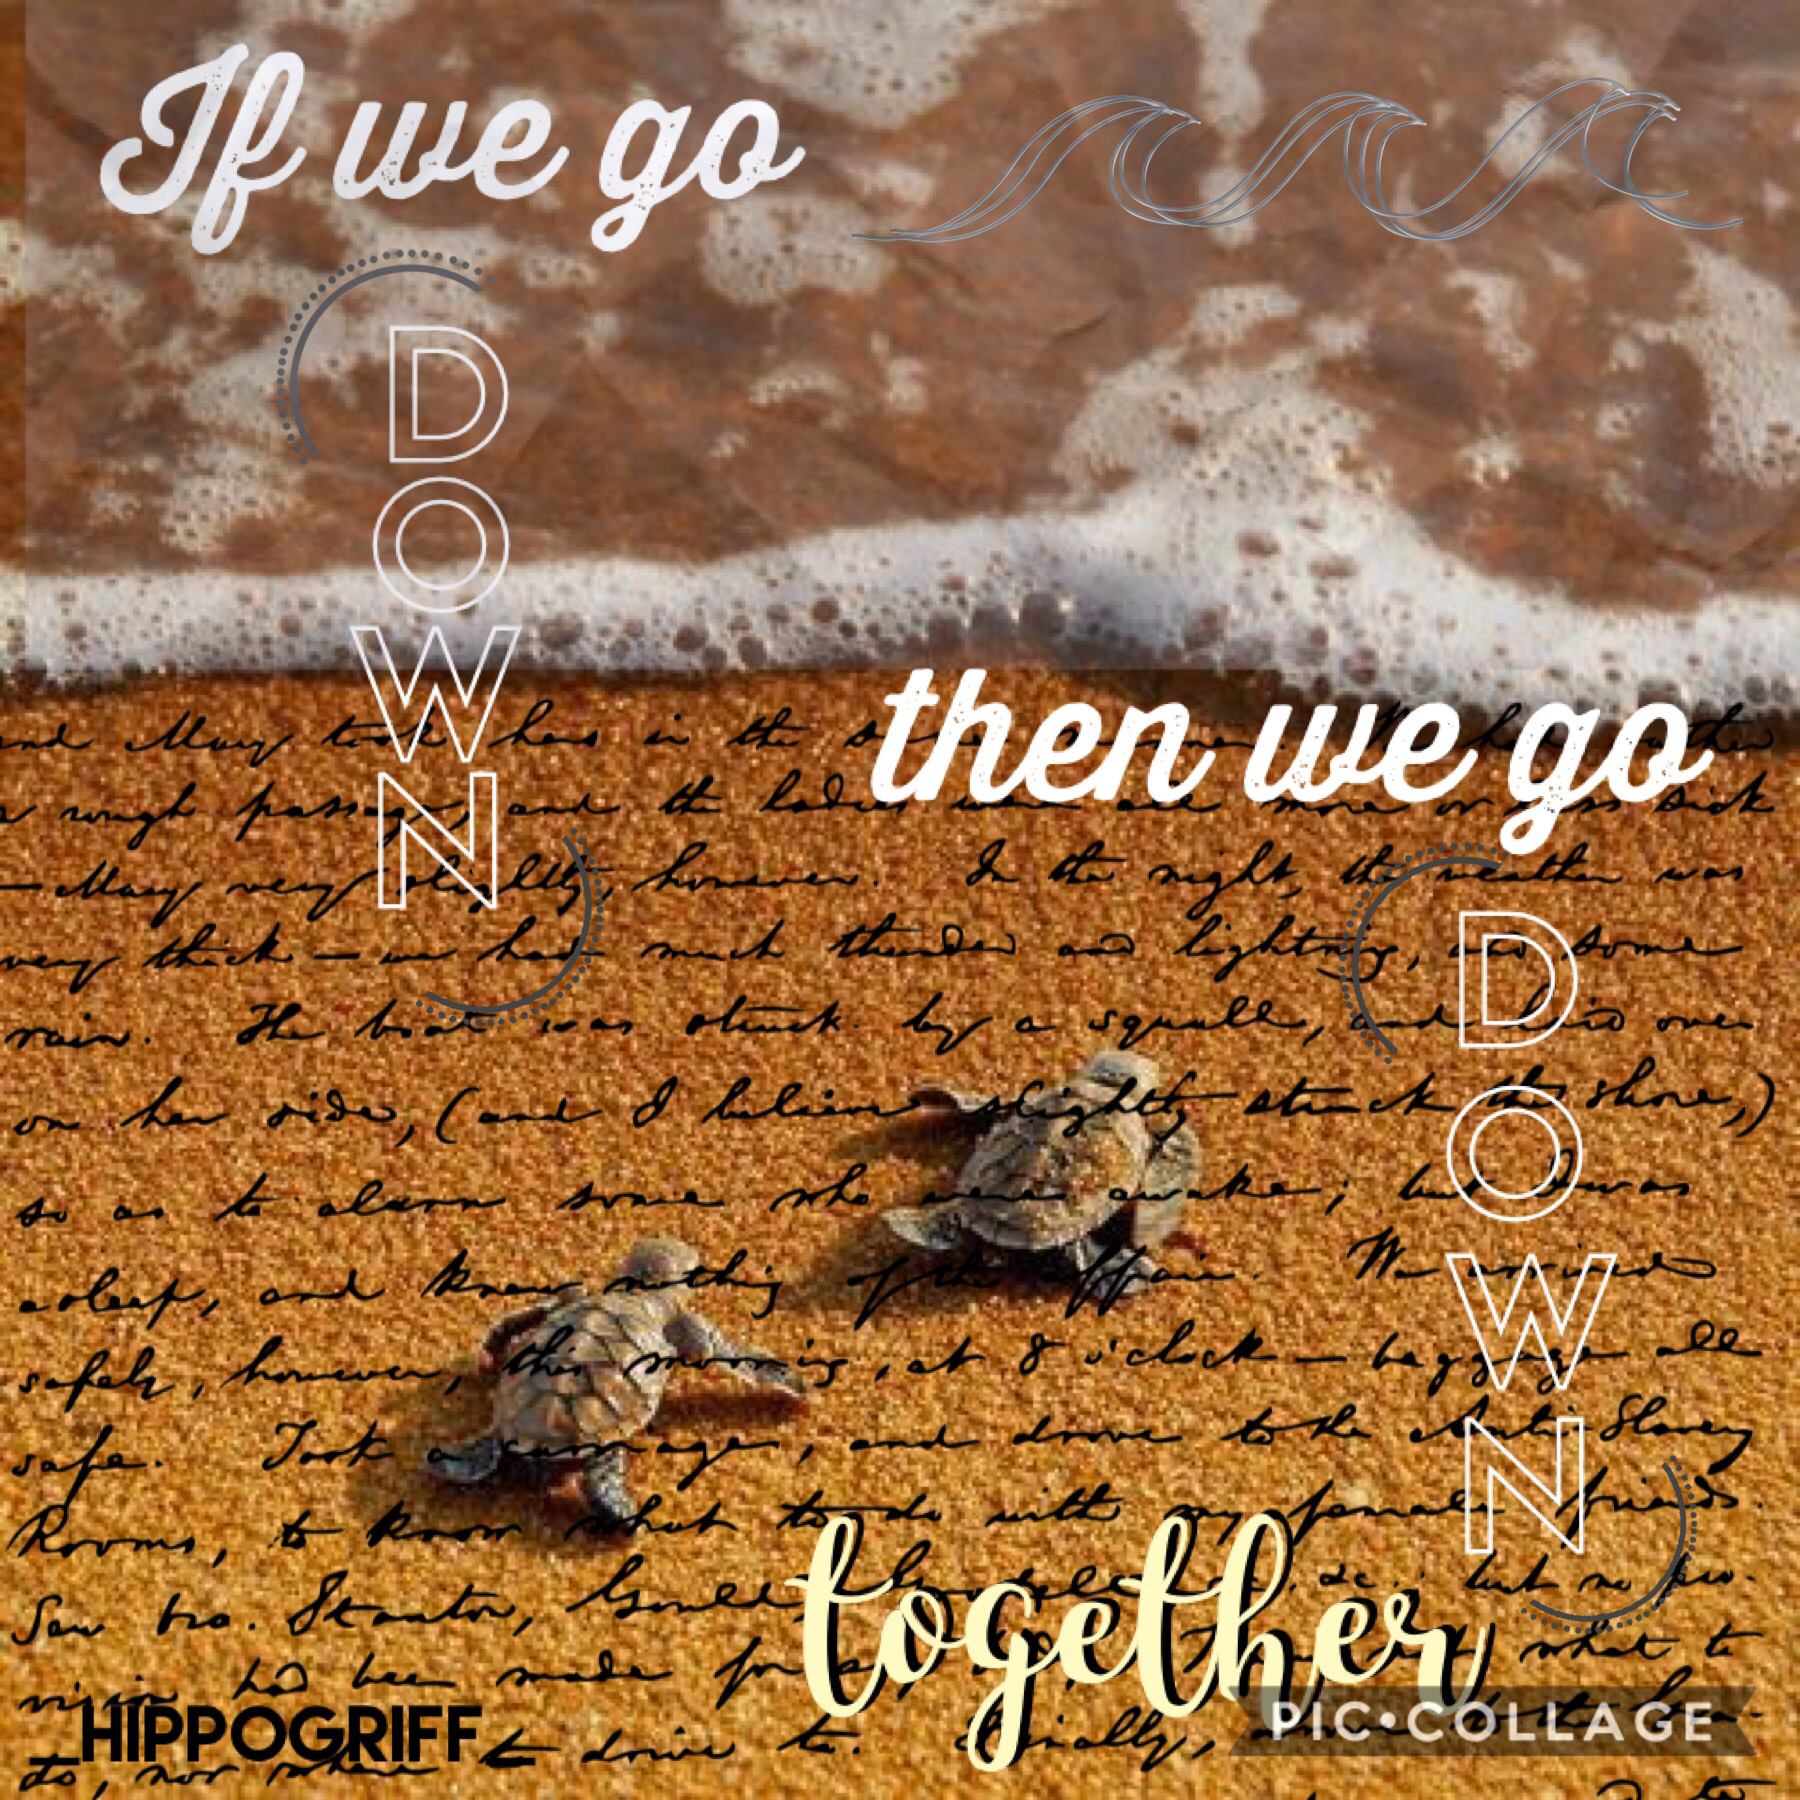 Love this song, “Paris”! Love turtles! TAP! 